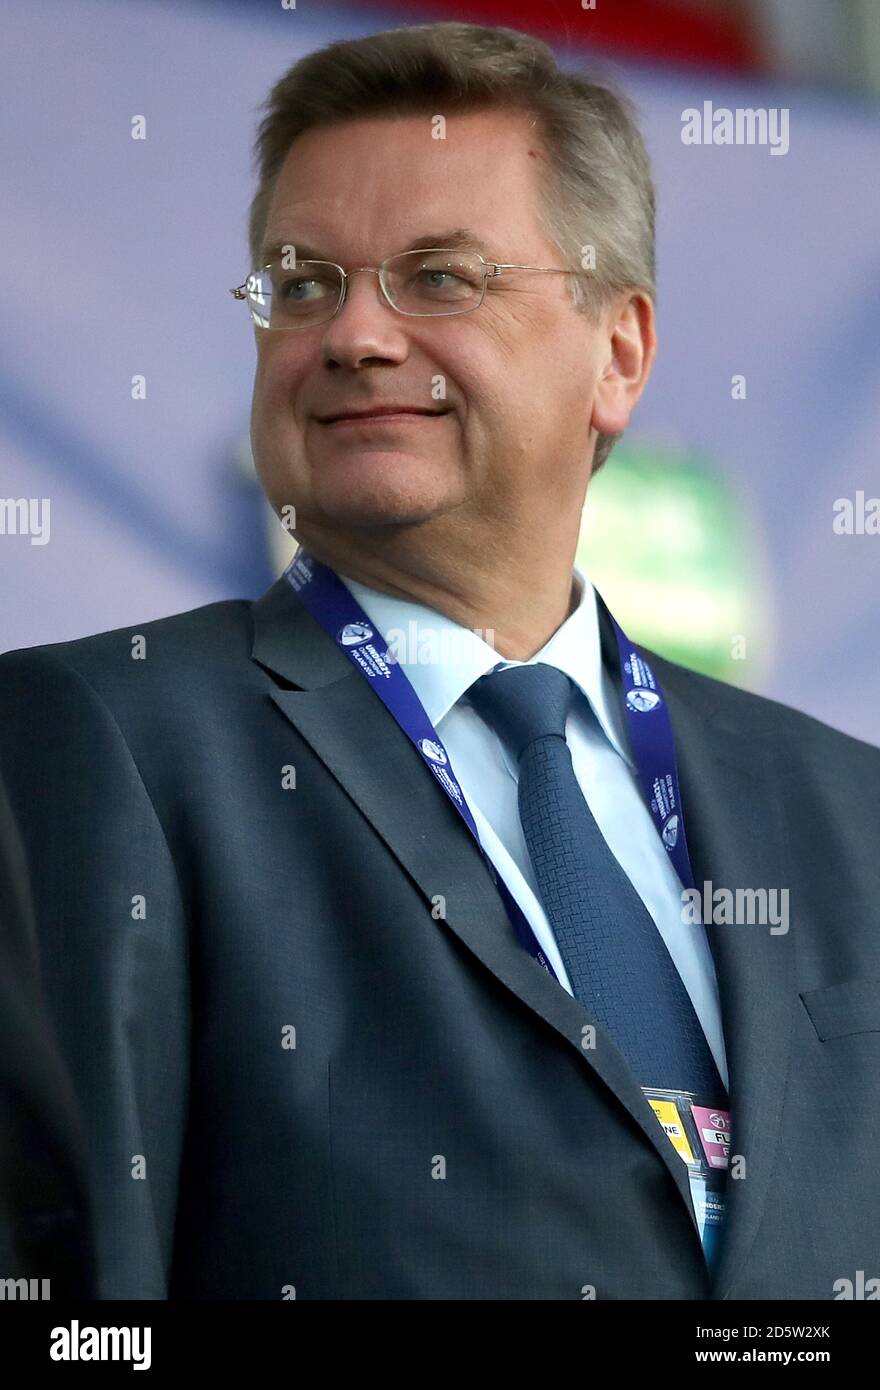 President of the German Football Association Reinhard Grindel Stock Photo